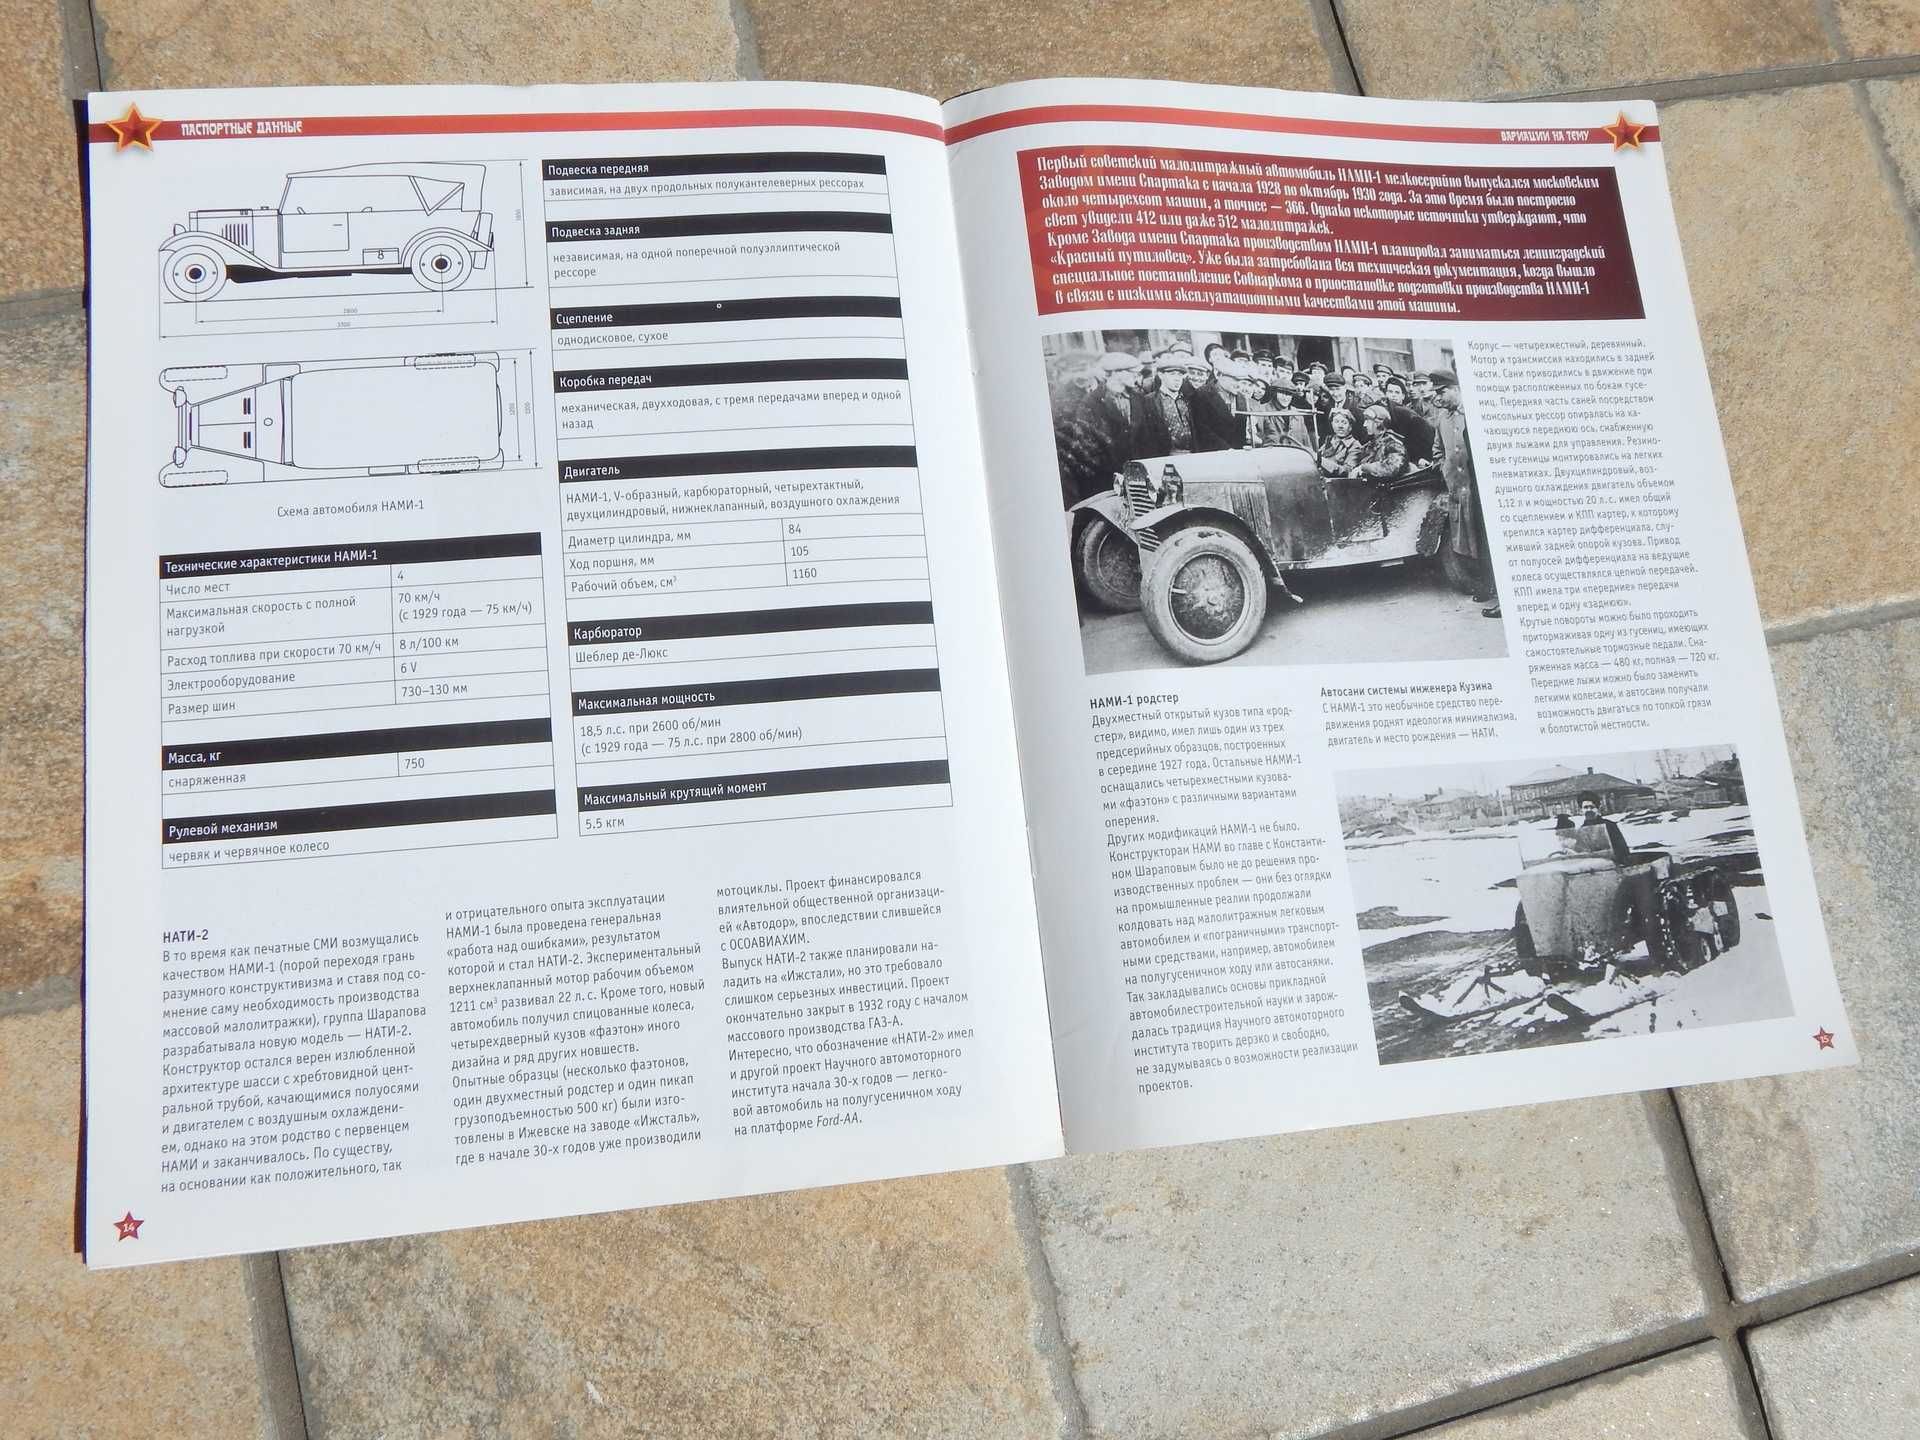 Revista prezentare istorie si detalii tehnice auto epoca NAMI-1 1927